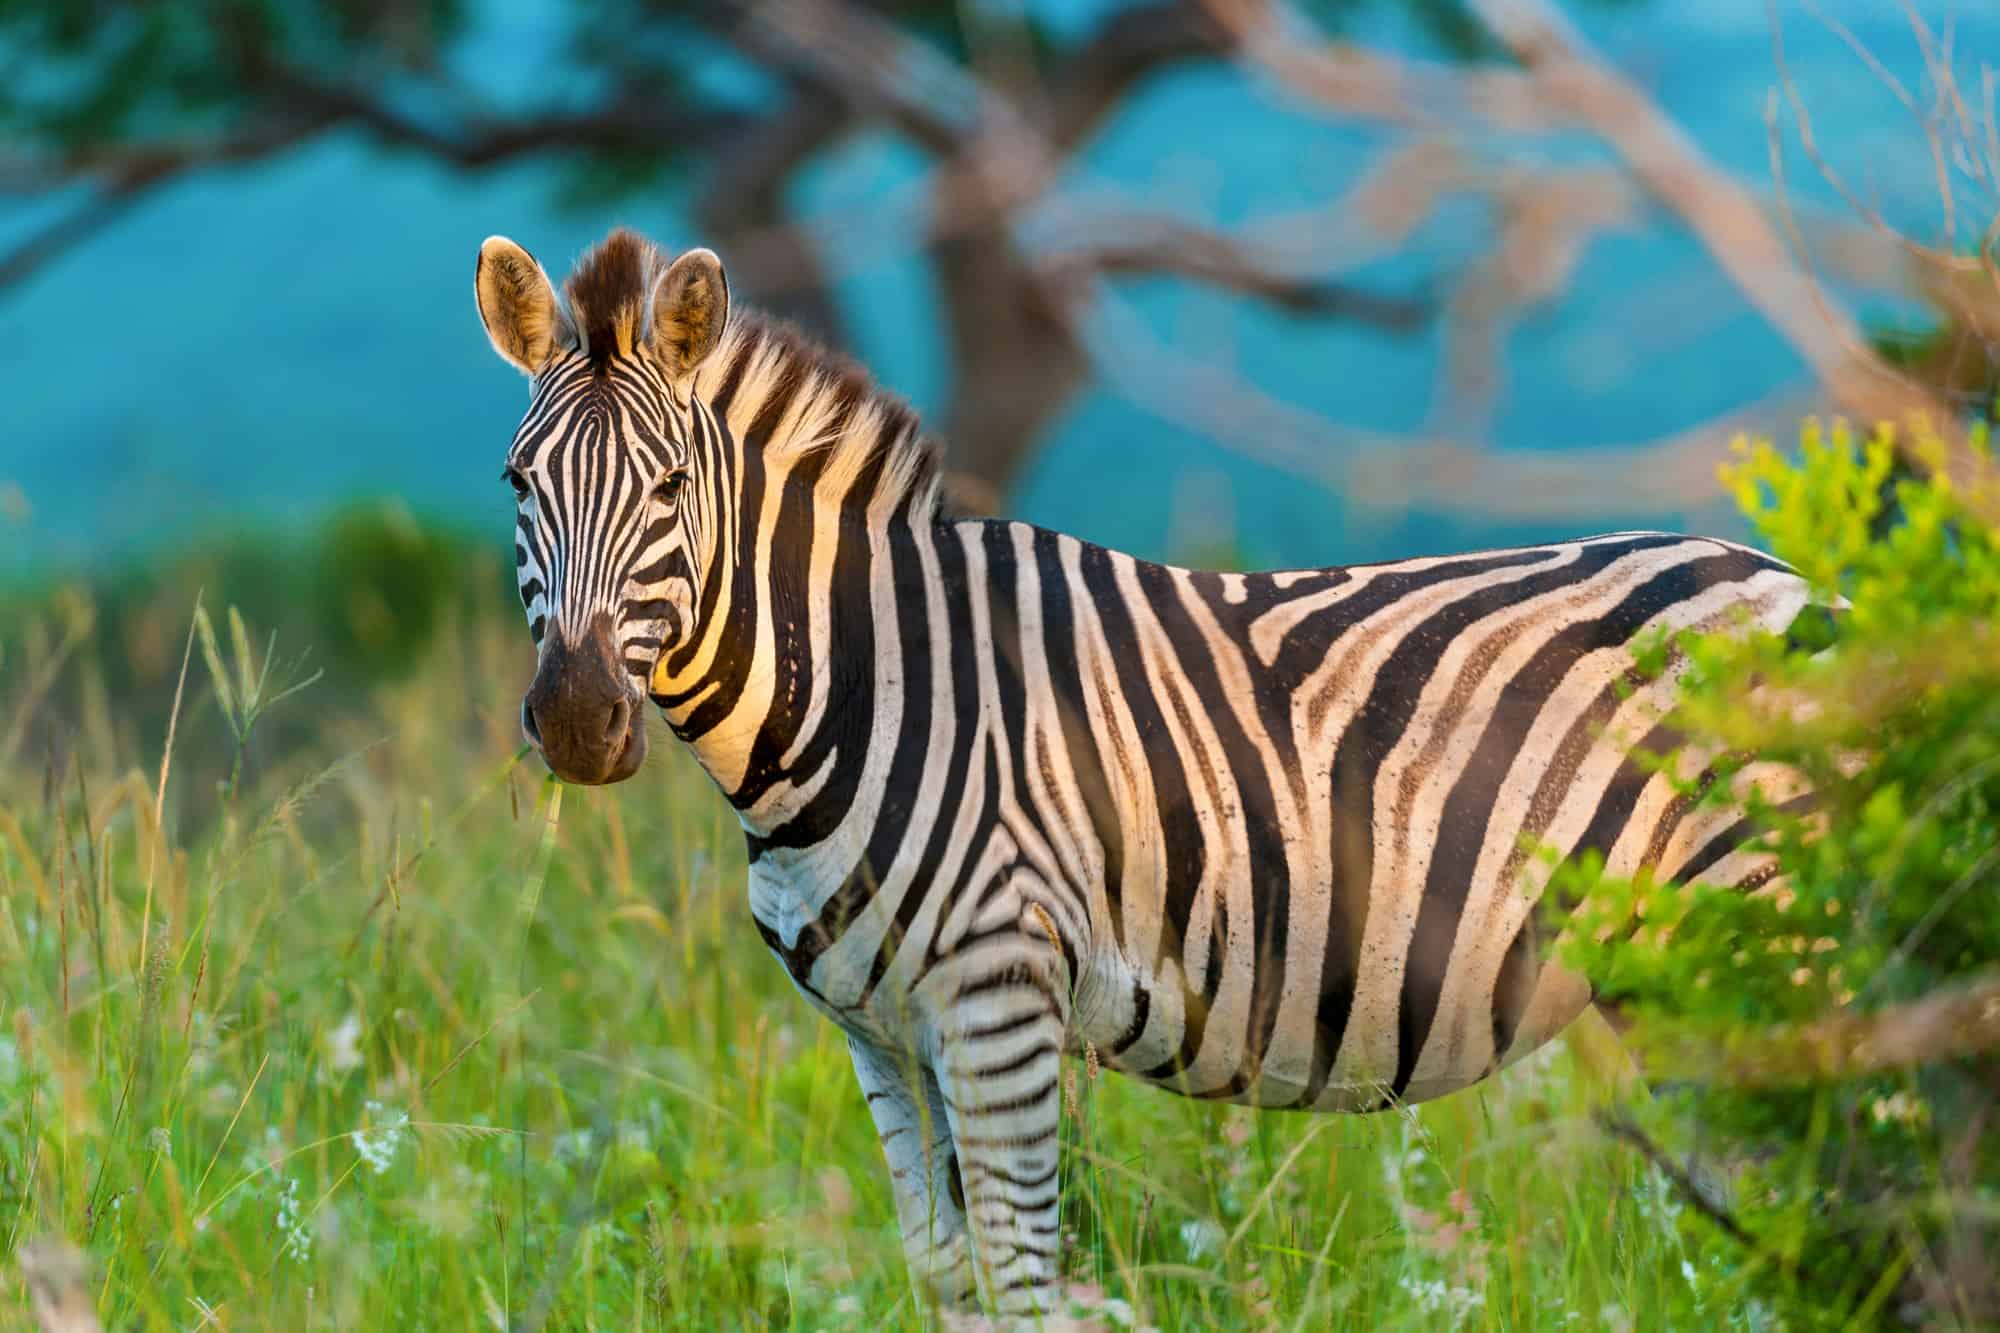 common zebra or Burchell's zebra